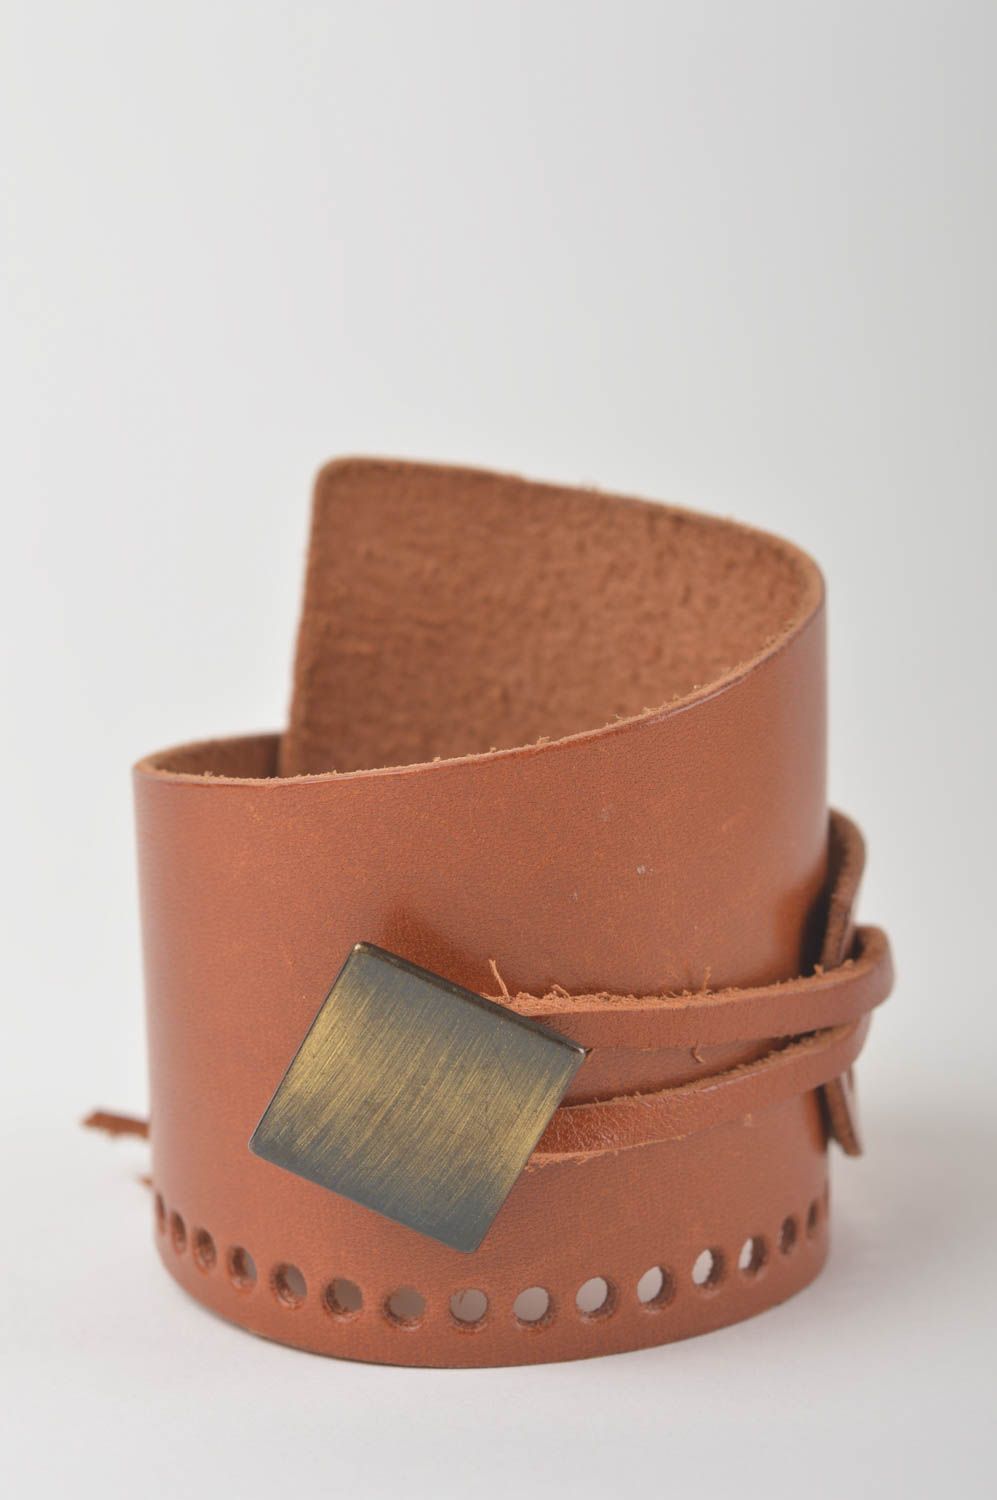 Unusual handmade leather bracelet leather goods cool jewelry designs photo 3